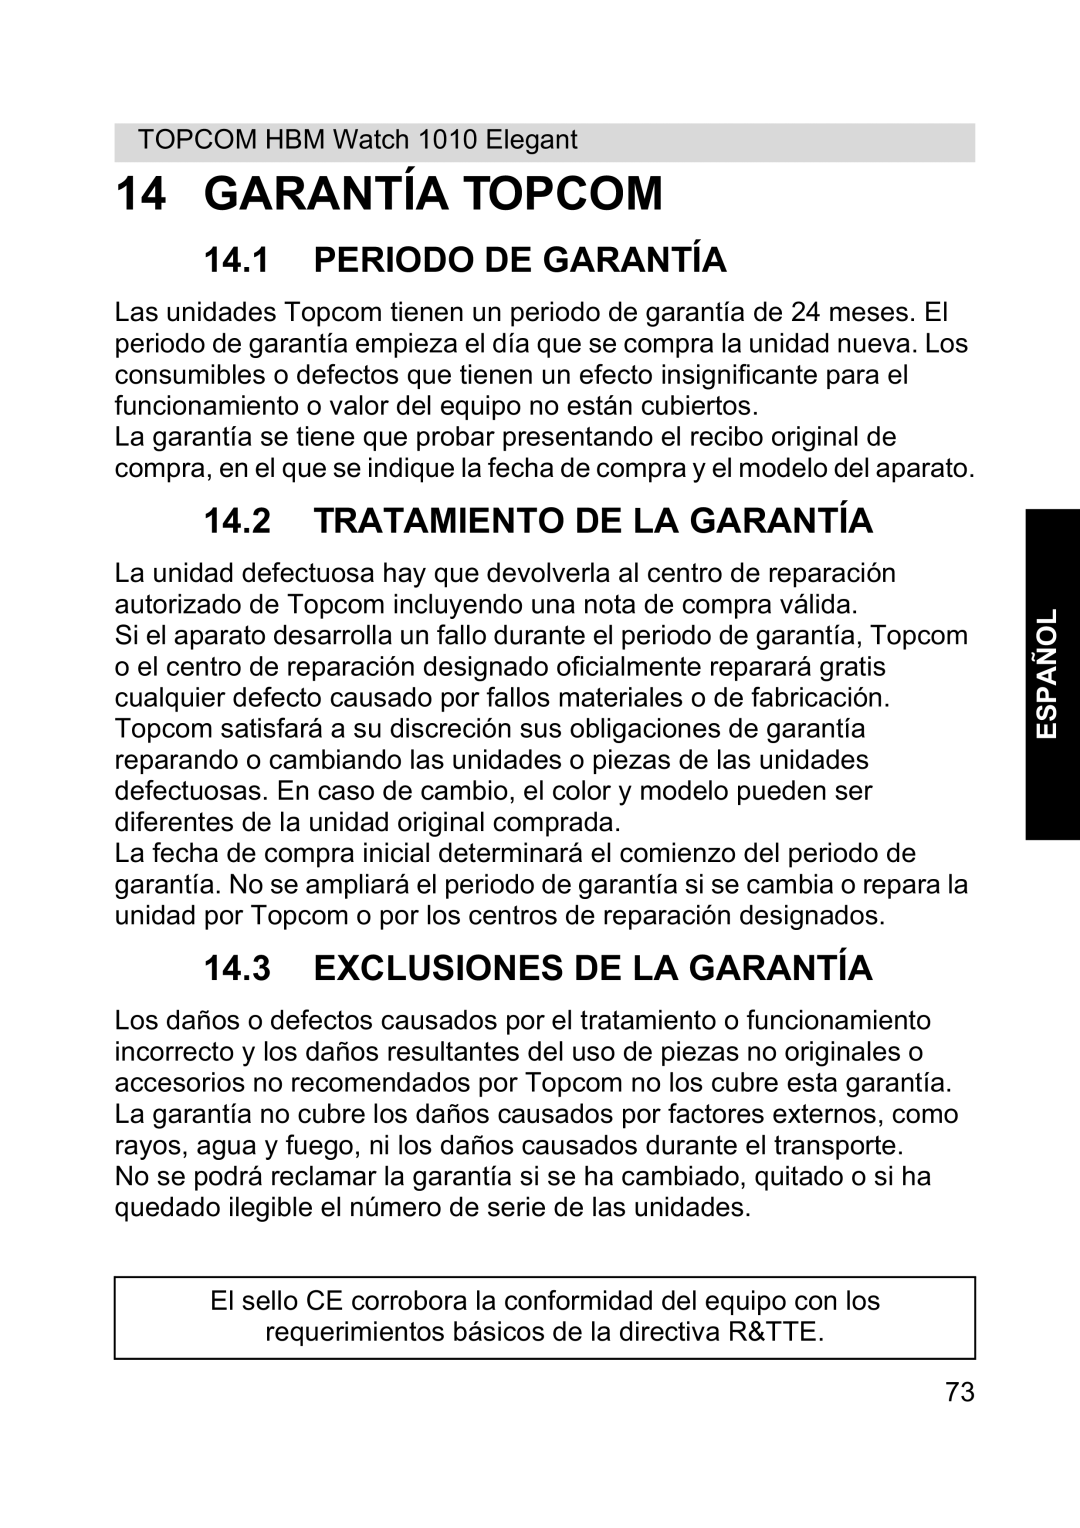 Topcom 1010 Elelgant manual Periodo DE Garantía, Tratamiento DE LA Garantía, Exclusiones DE LA Garantía 